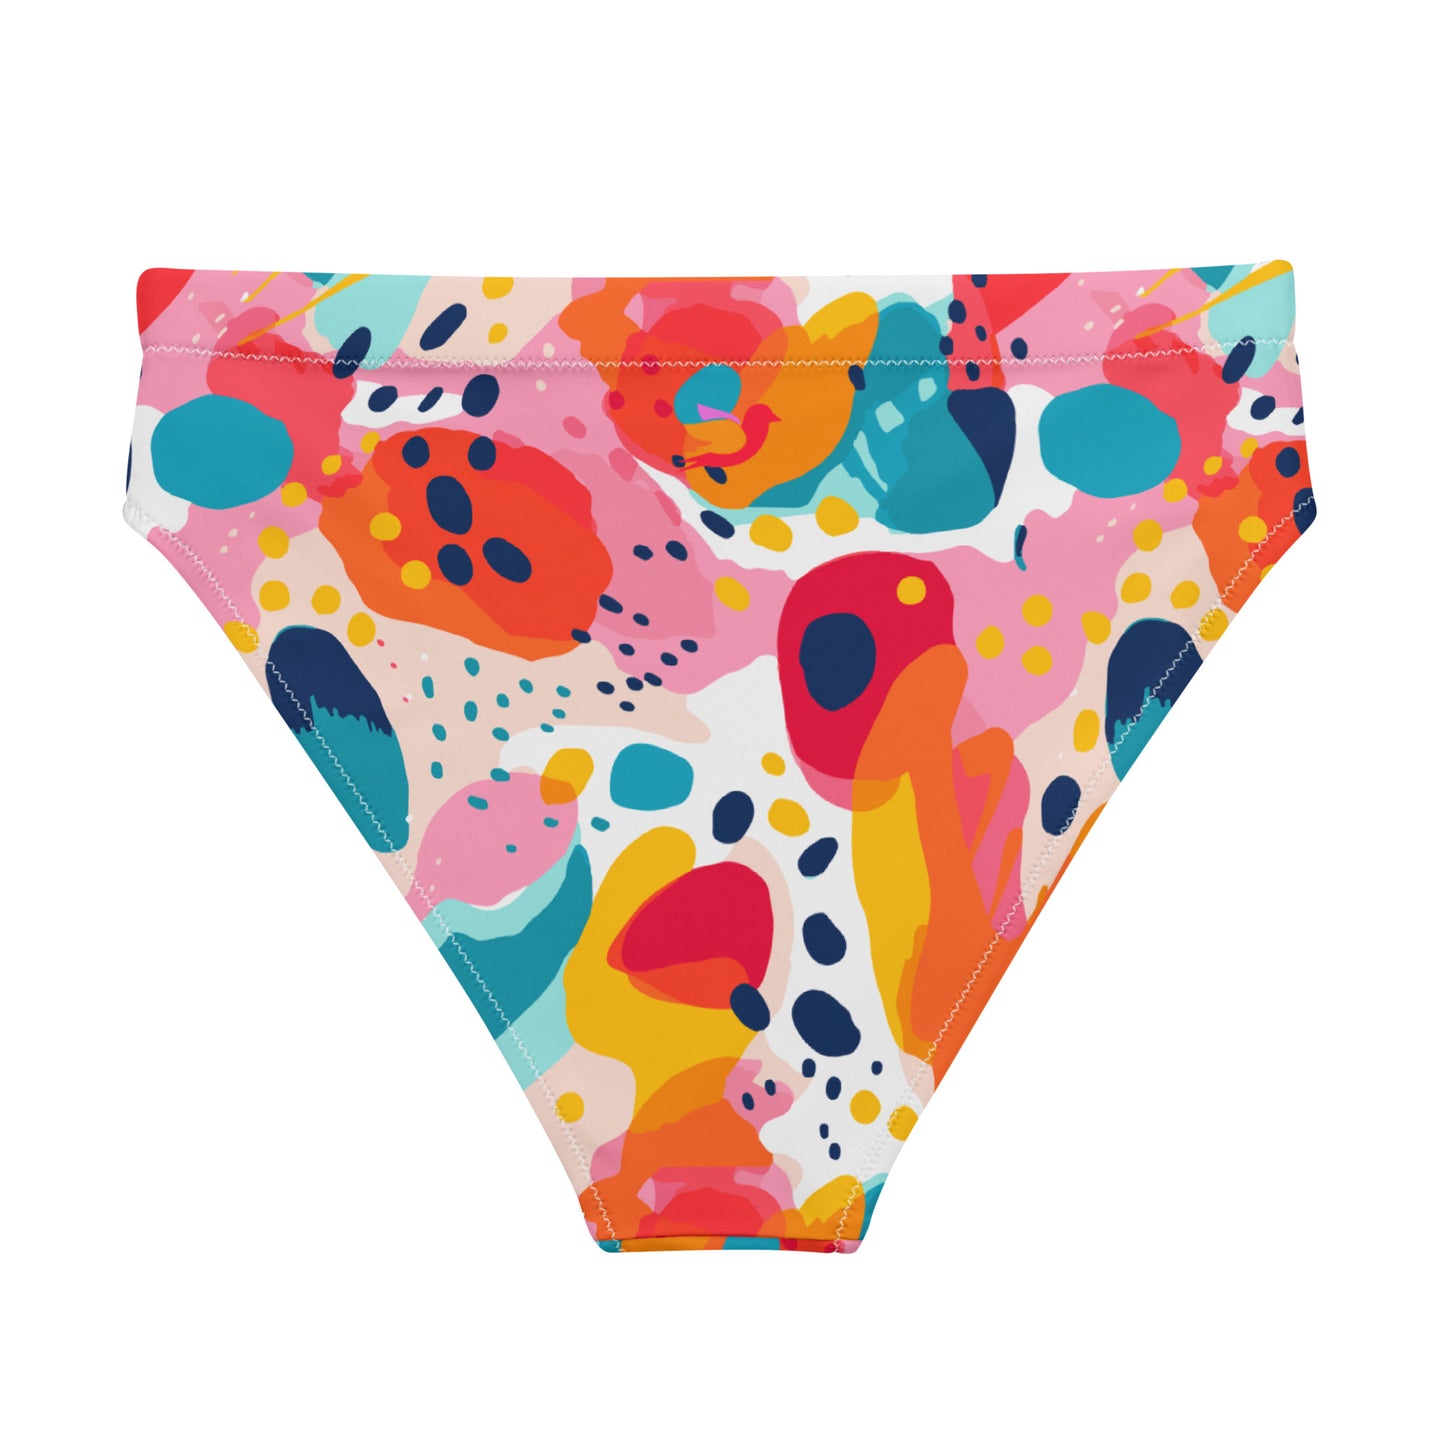 Milano Recycled Mid-Rise Cheeky Bikini Bottom